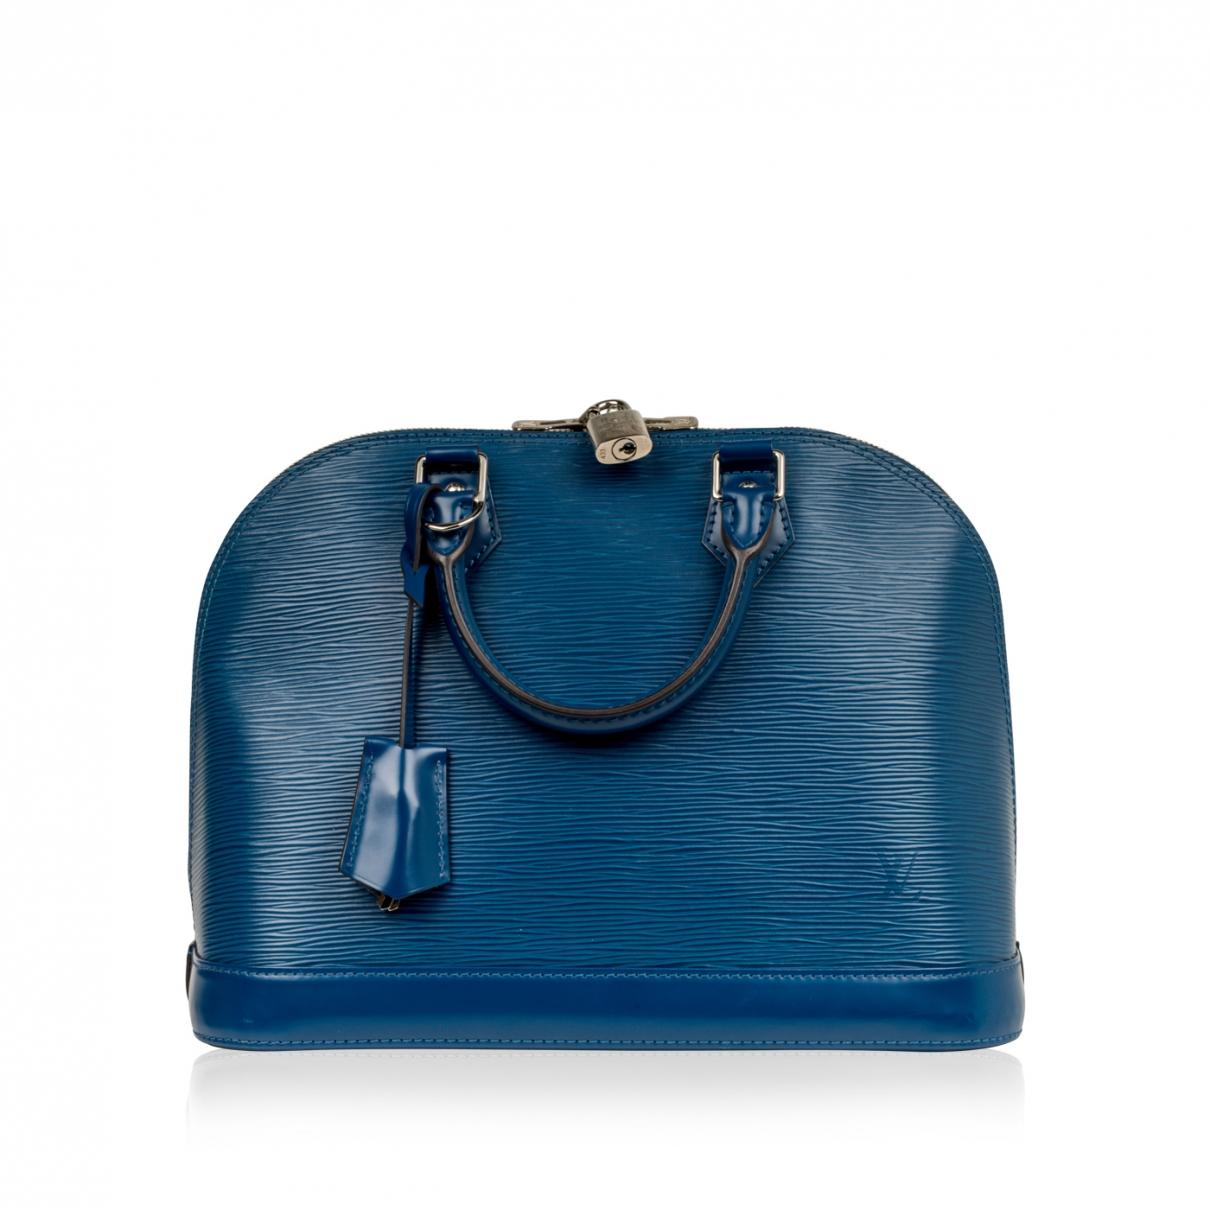 Lyst - Louis Vuitton Alma Blue Leather Handbag in Blue